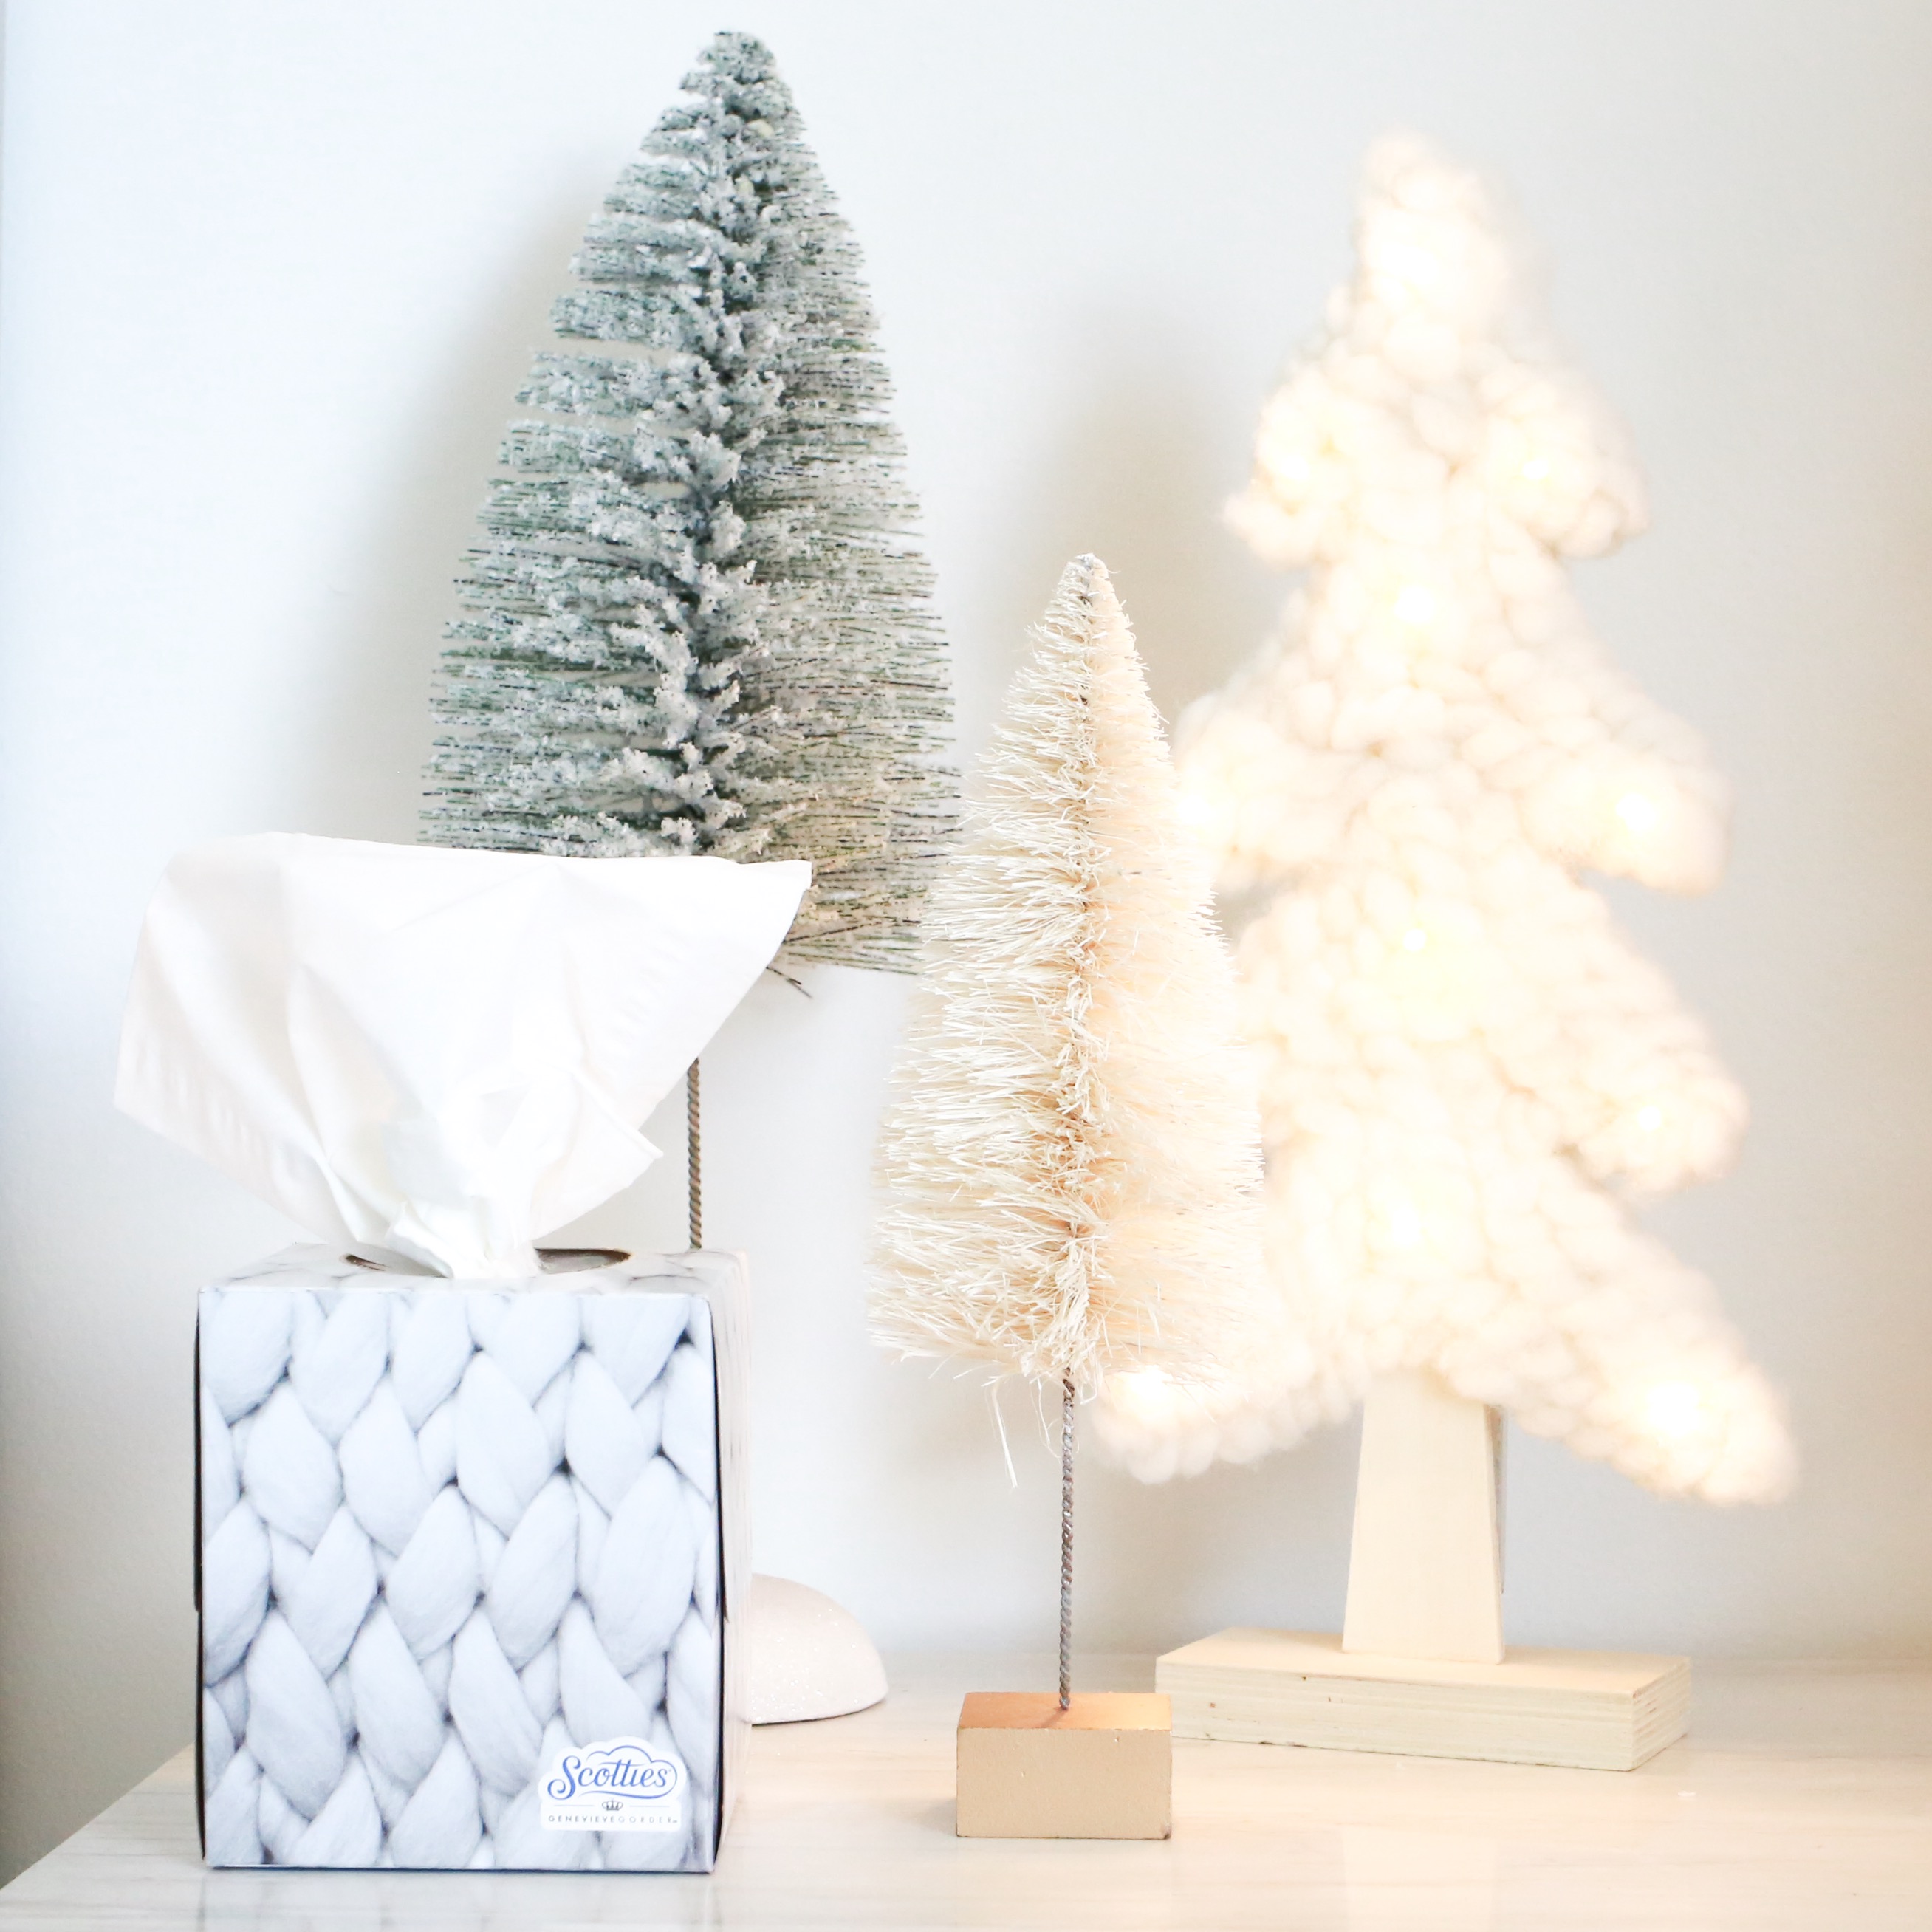 Mini bristle Christmas trees, christmas tree decor, Scotties x Genevieve Gorder collection, stylish holiday tissue boxes